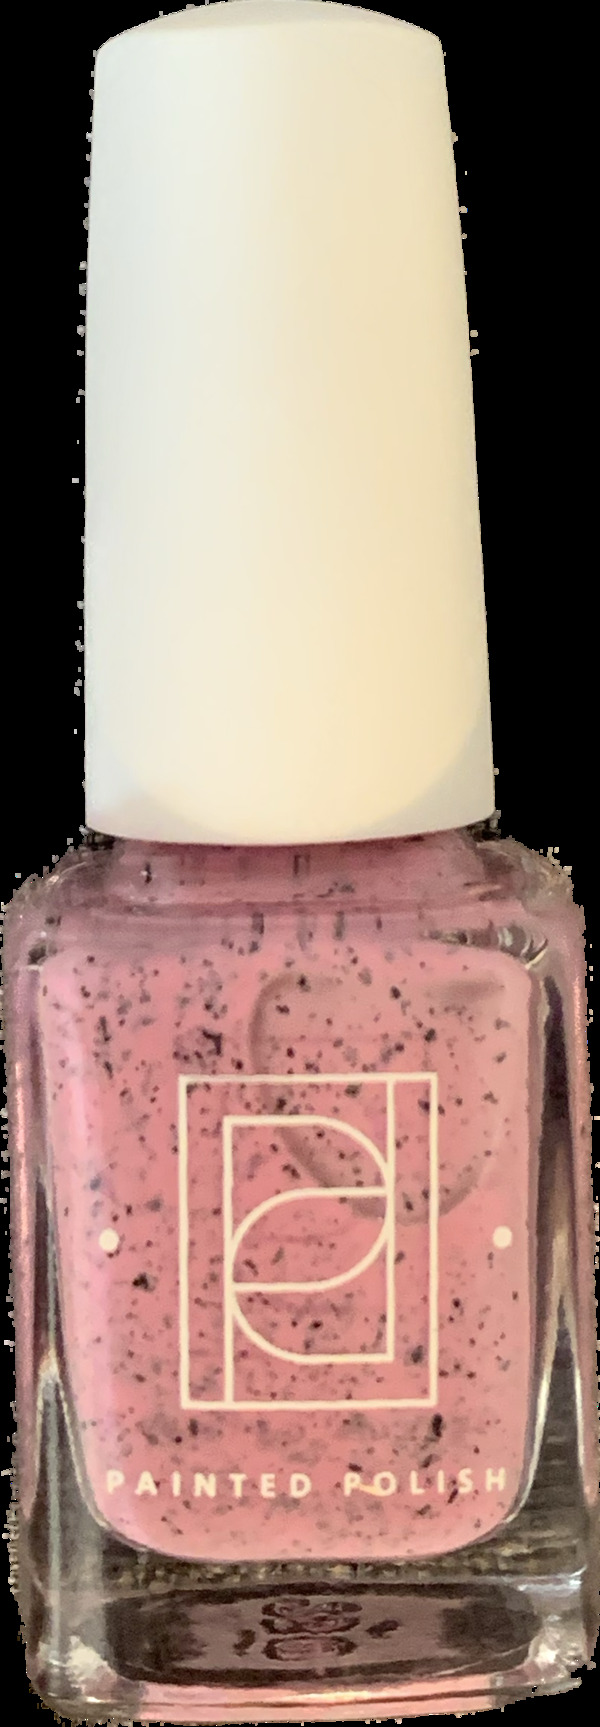 Nail polish swatch / manicure of shade Painted Polish Cotton Candy Crush